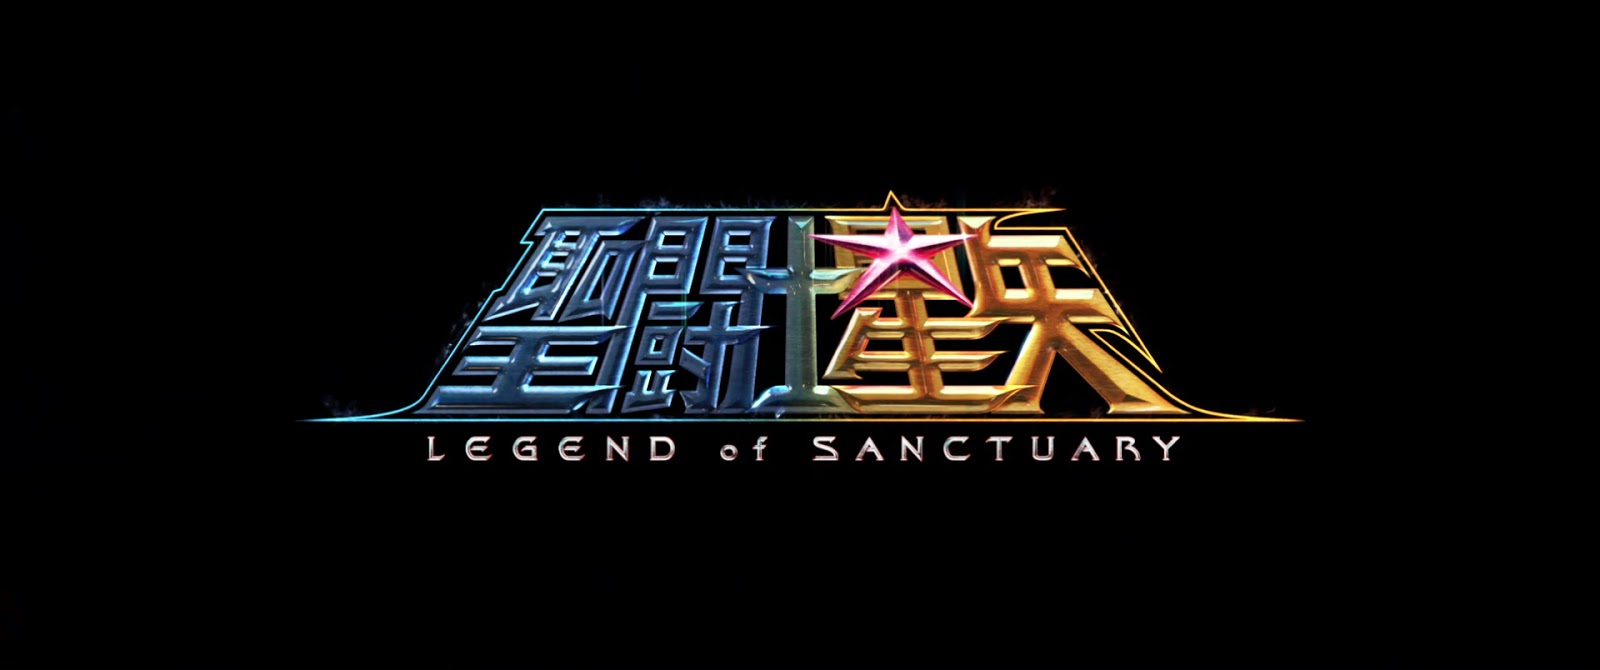 Saint Seiya: Legend of Sanctuary' Review: Anime Saints Get CG Upgrade